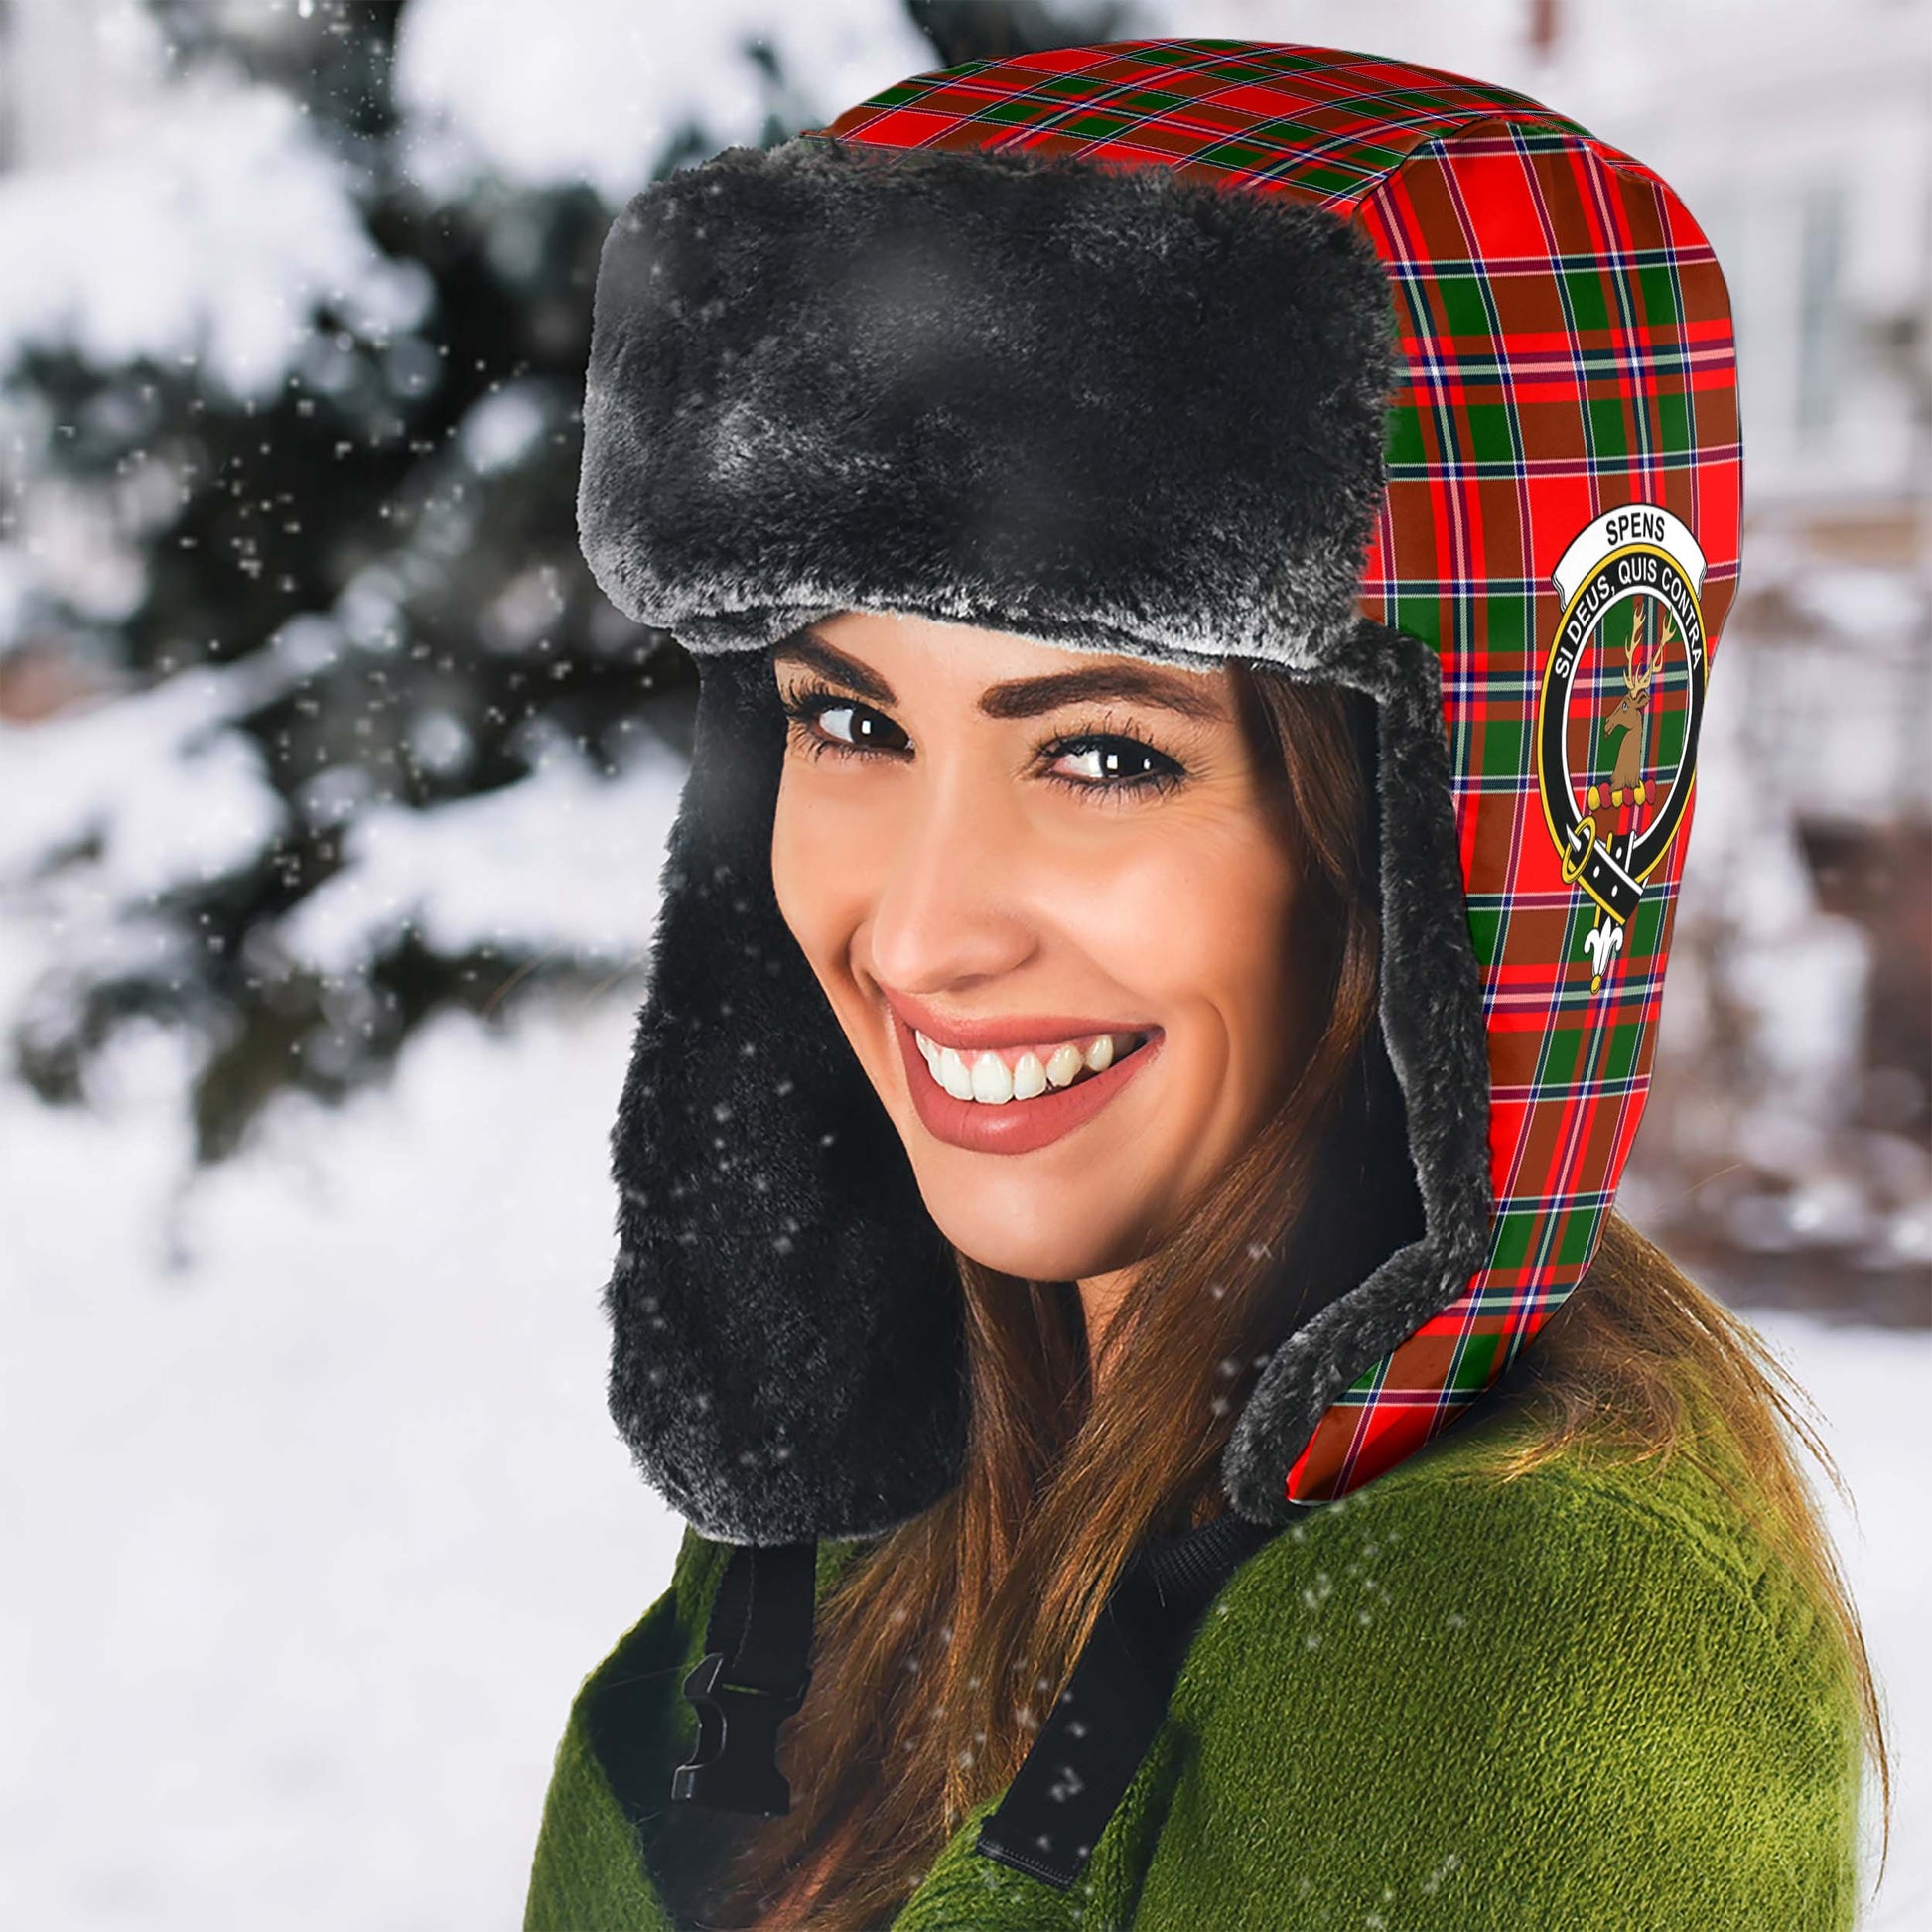 Spens Modern Tartan Winter Trapper Hat with Family Crest - Tartanvibesclothing